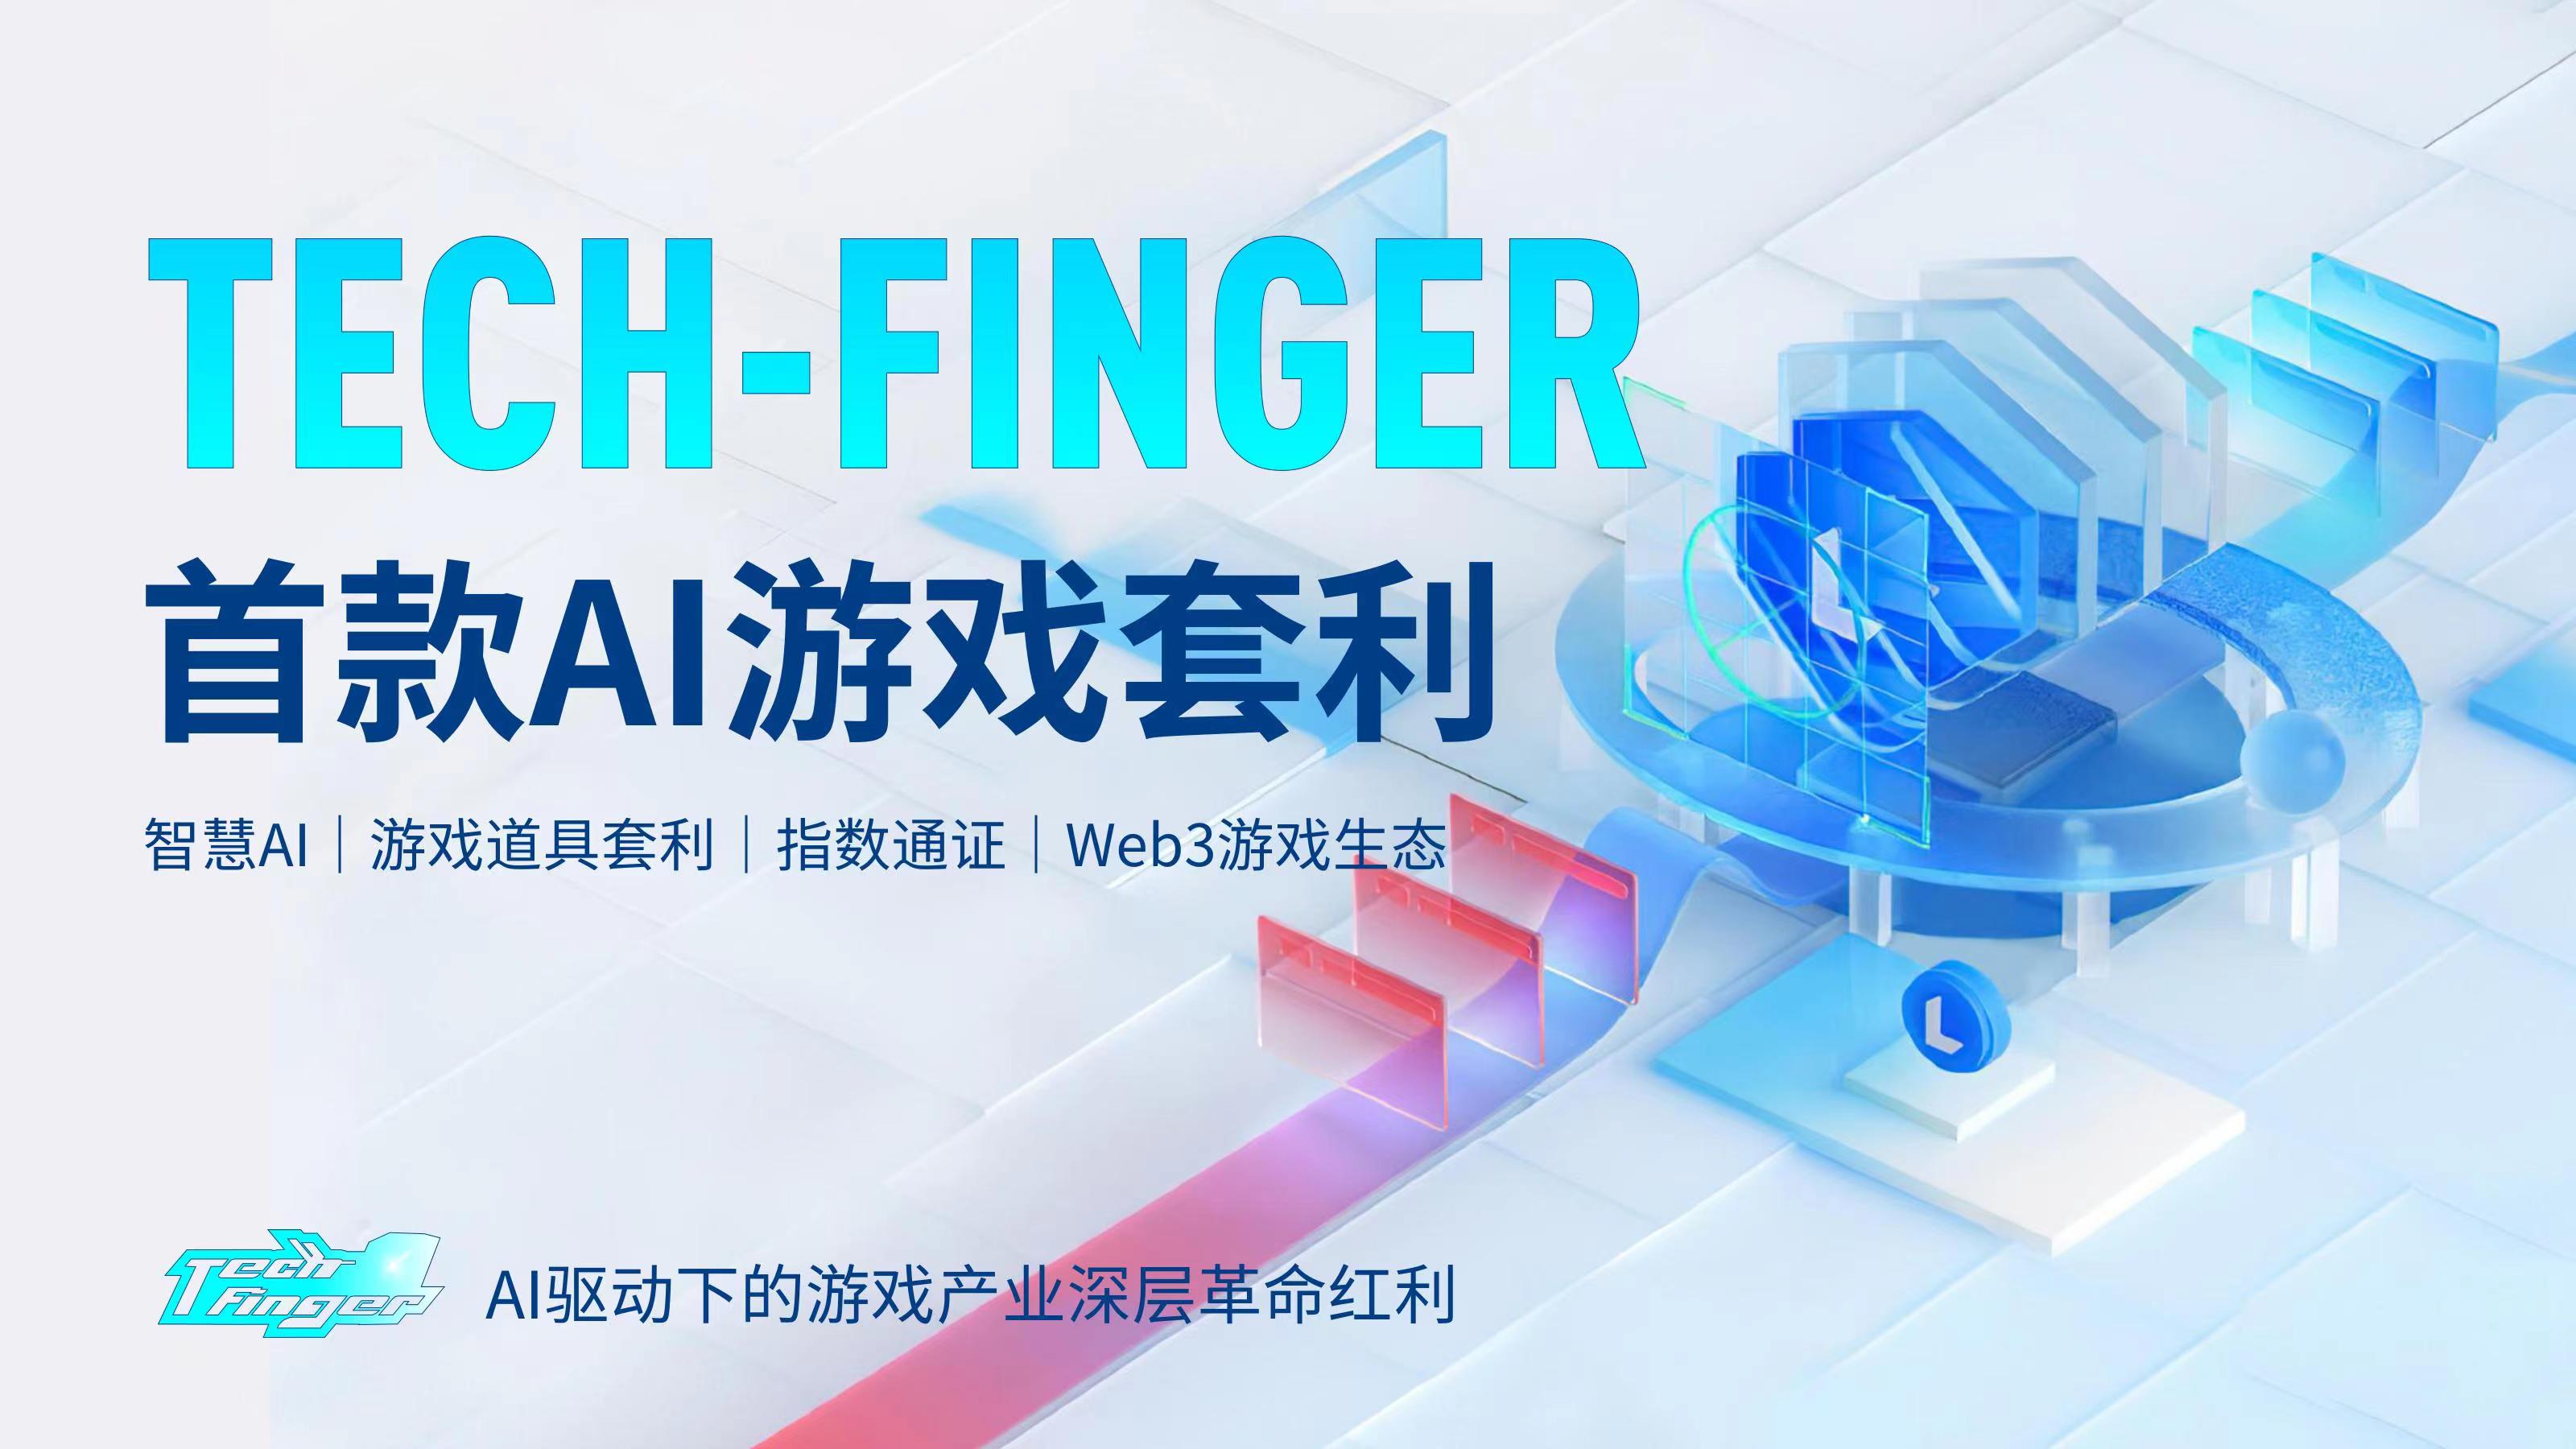 Tech-Finger游戏道具搬砖套利，月化40%，强大造血无套路